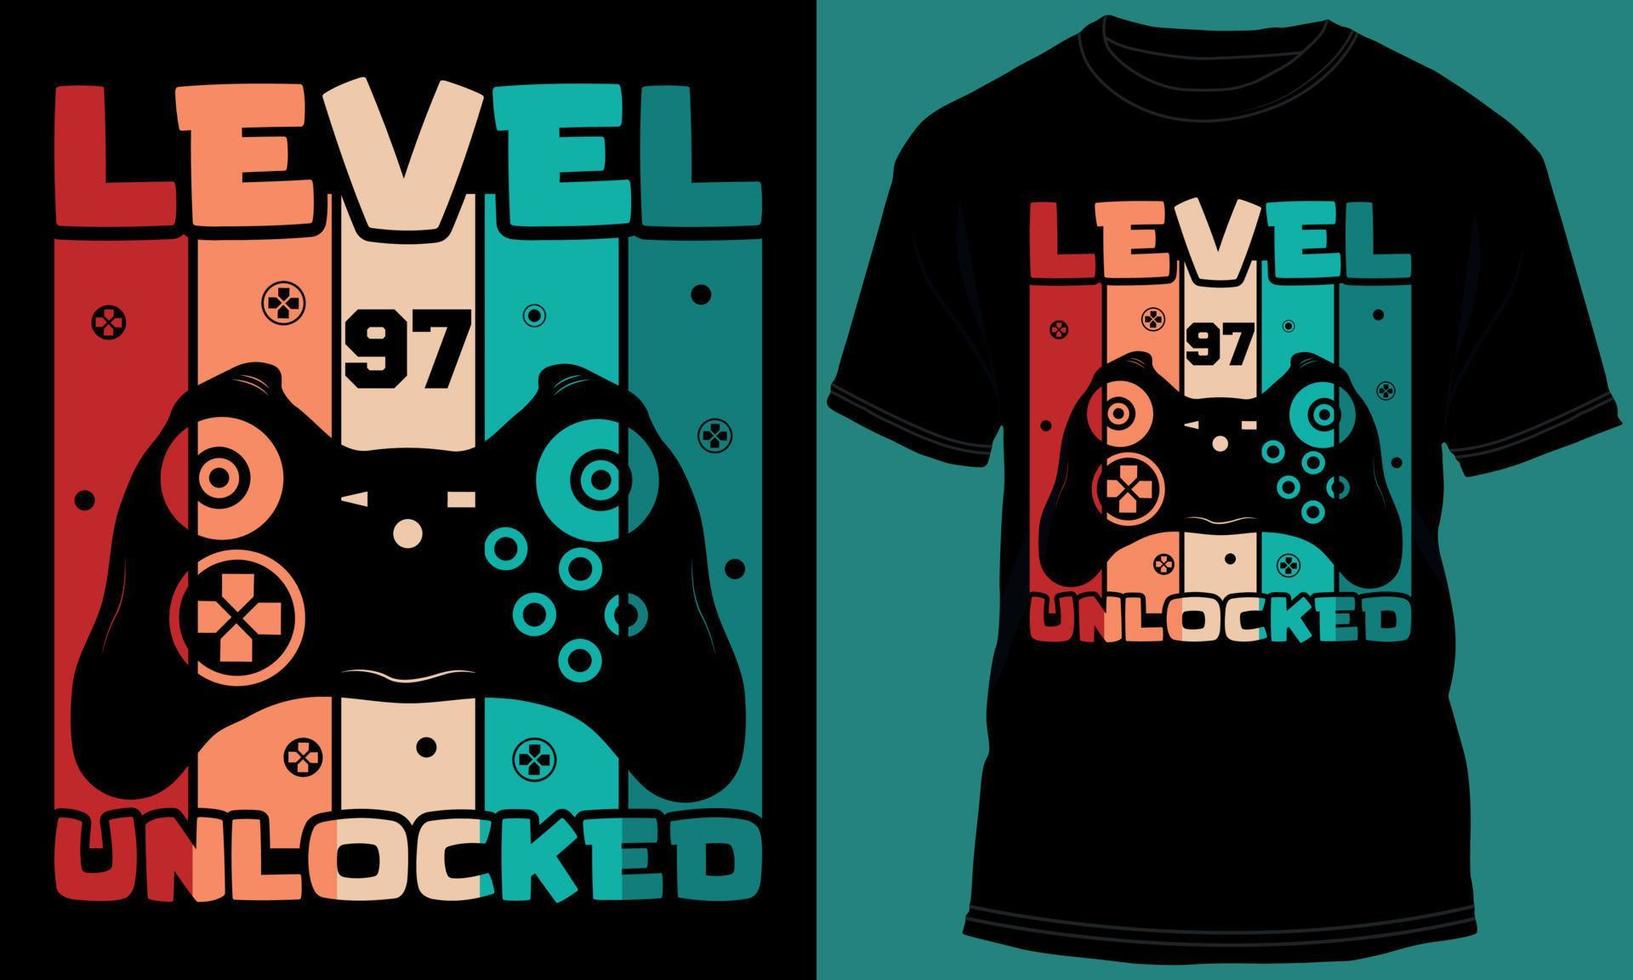 Spieler oder Spielen Niveau 97 freigeschaltet T-Shirt Design vektor